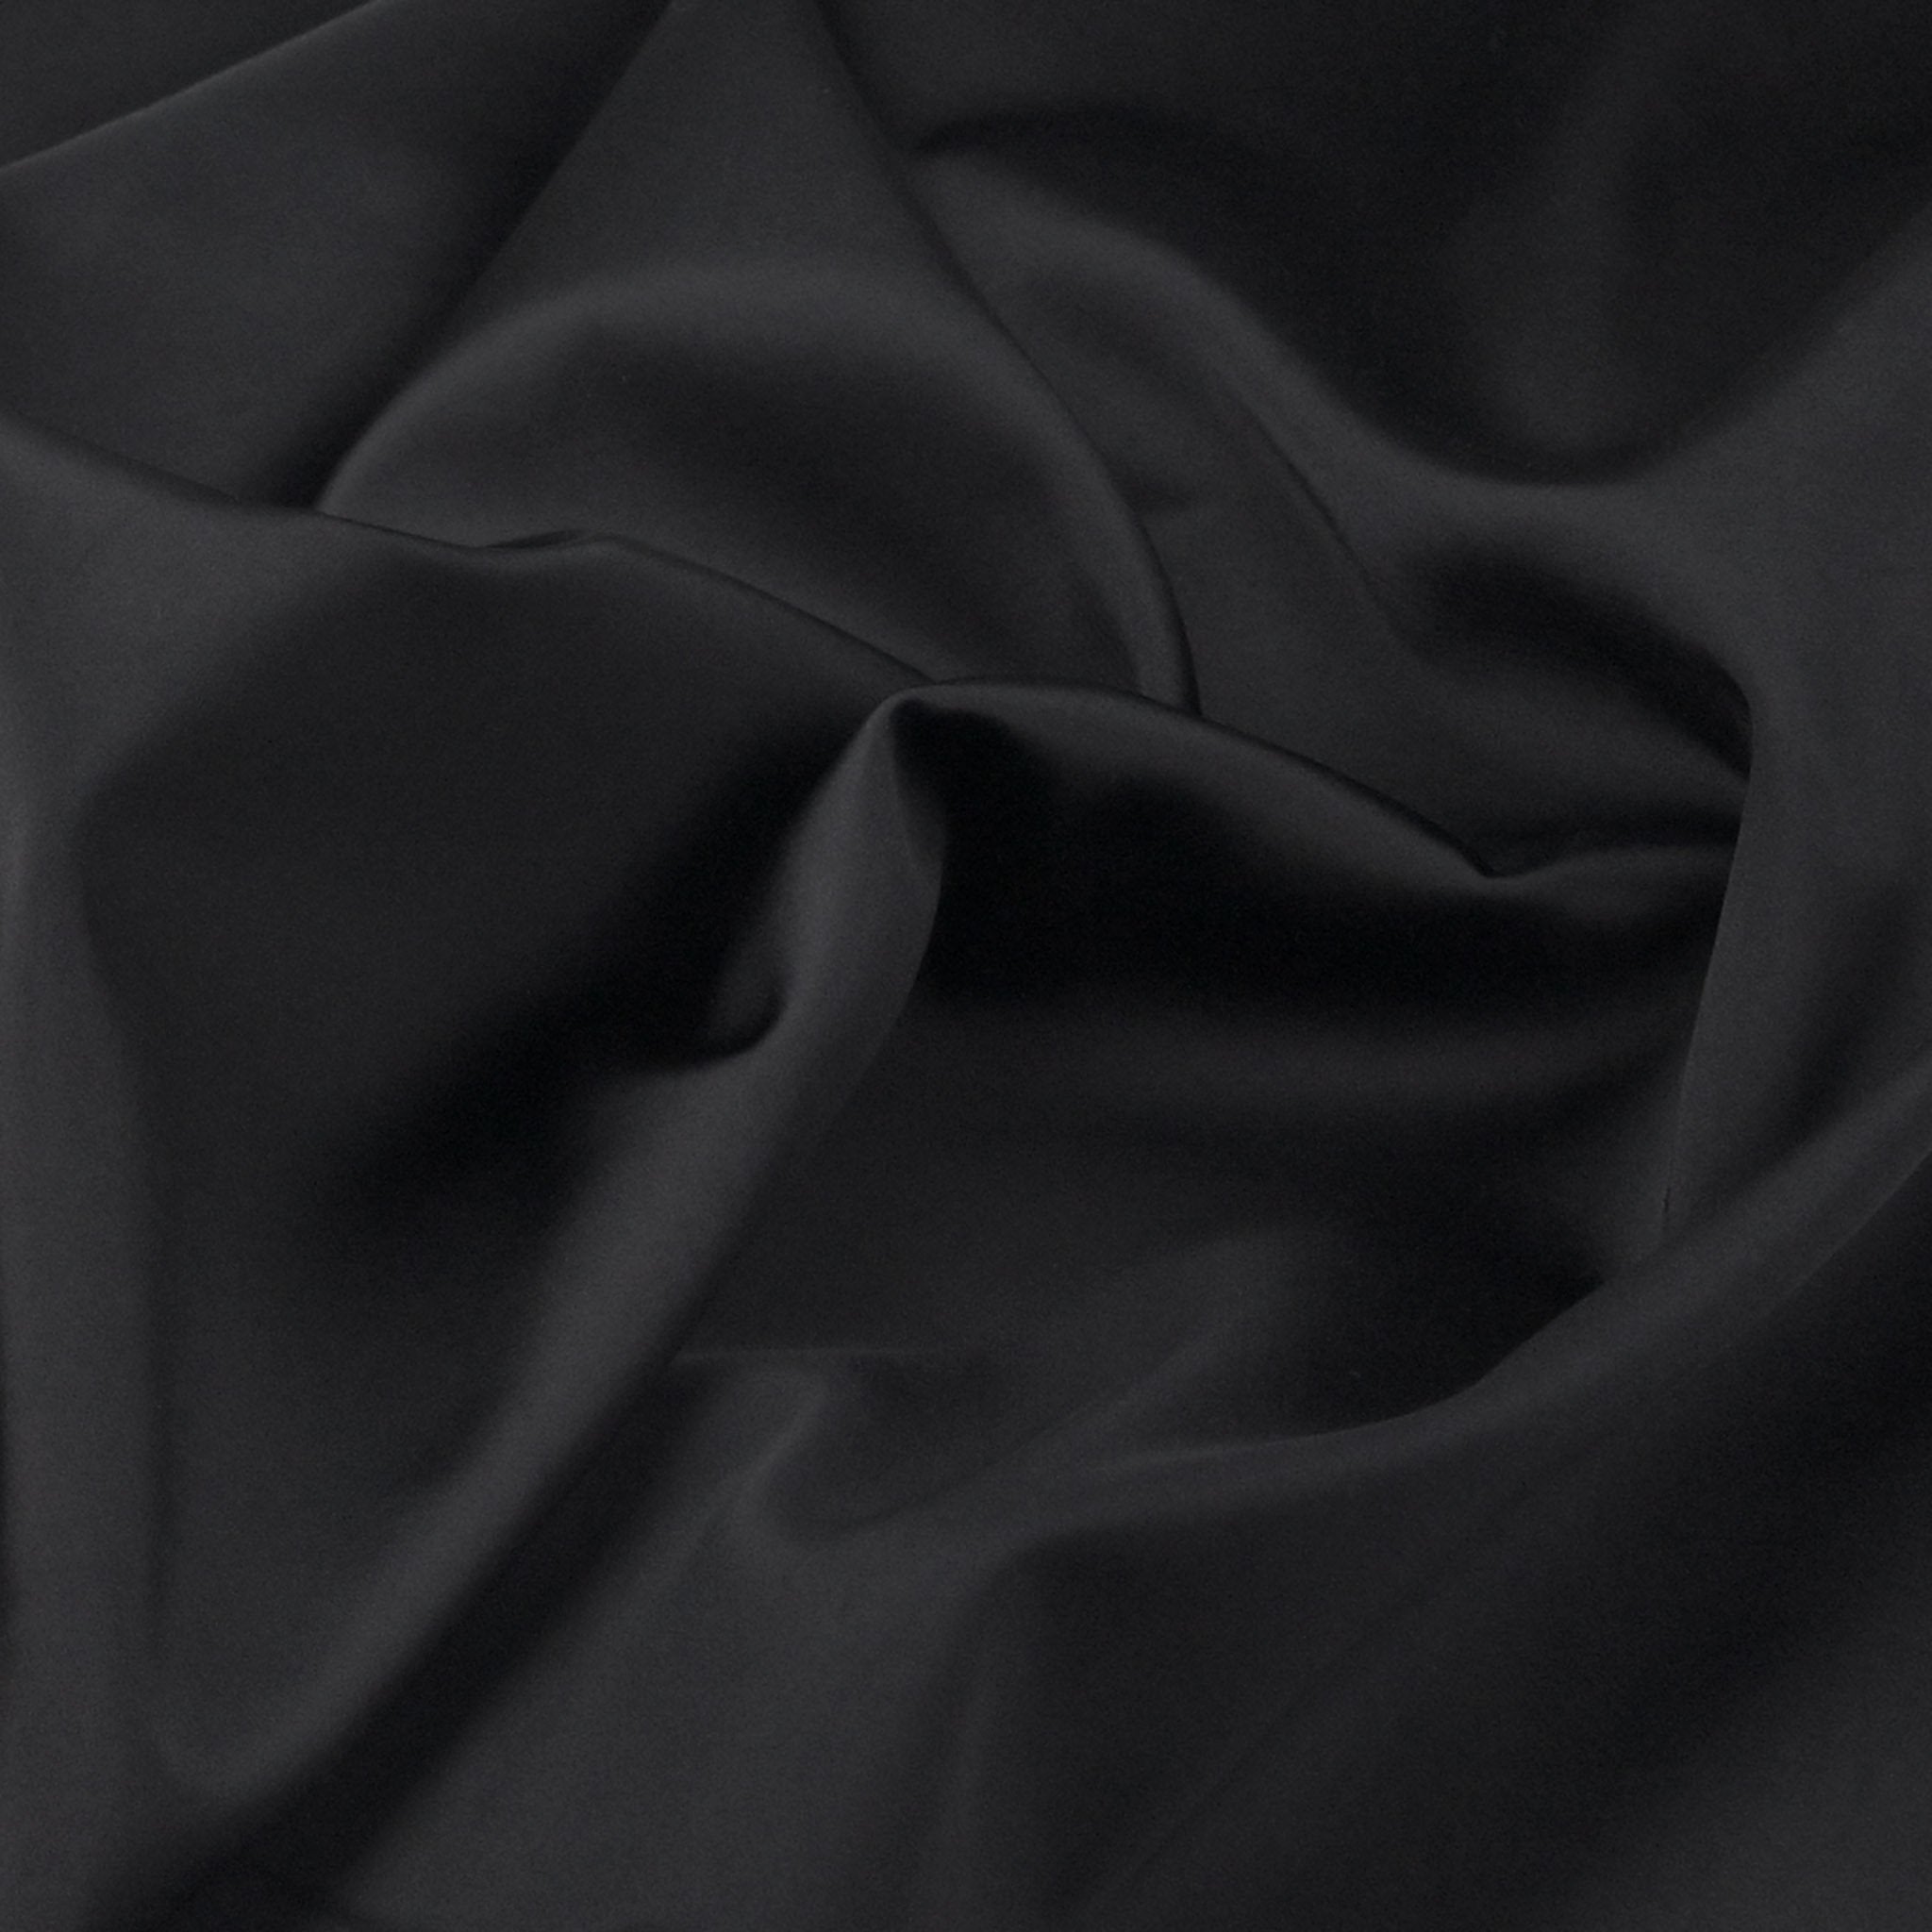 Black Satin Bonded Fabric 98878